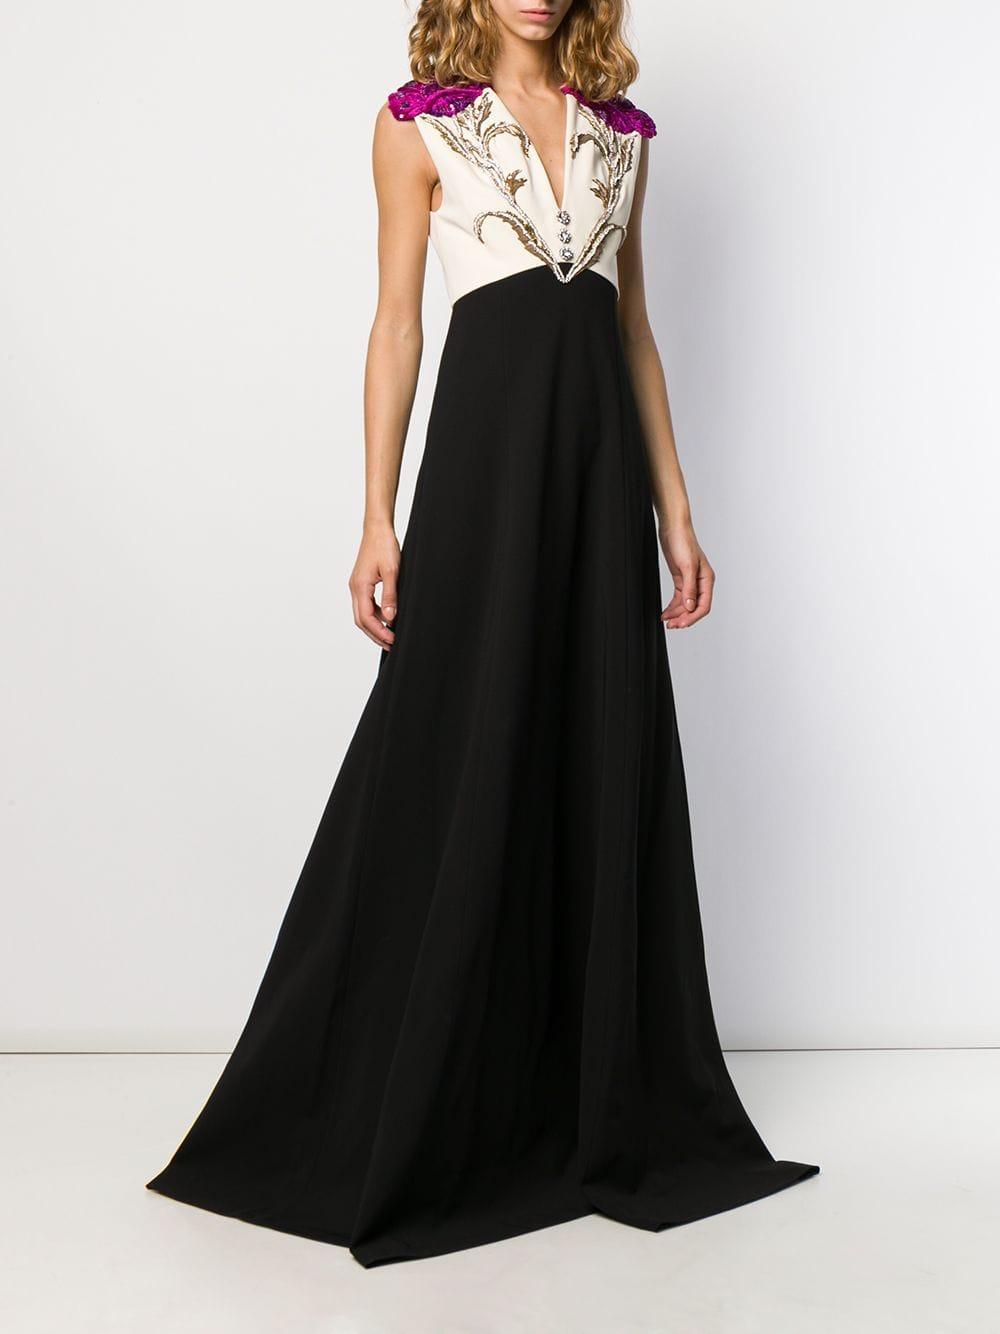 Gucci Floral Appliqué Evening Dress in Black | Lyst